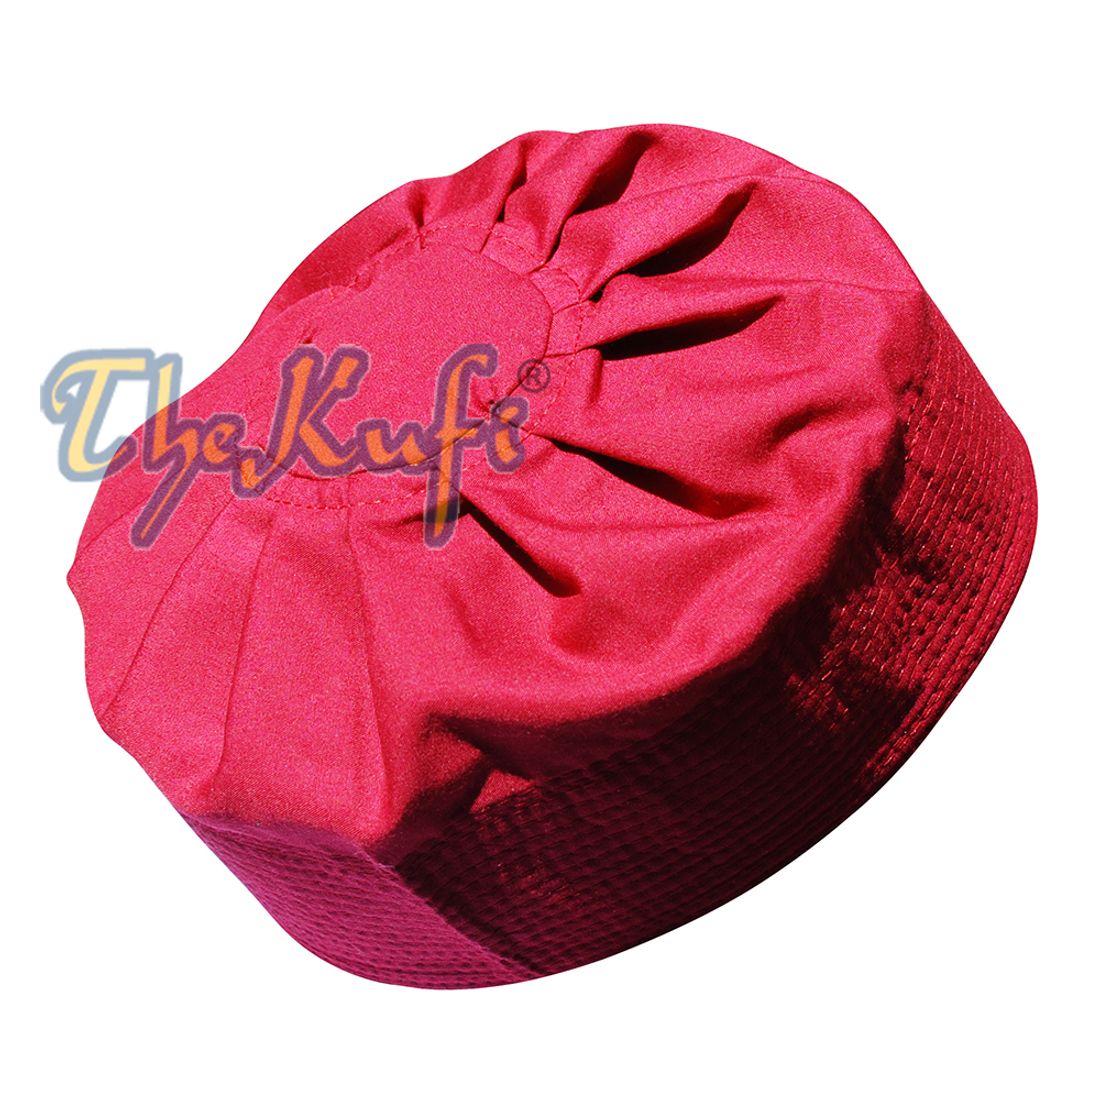 Red Cotton-Blend Pleated Top 9cm Tall Fabric Kufi Prayer Cap Beanie